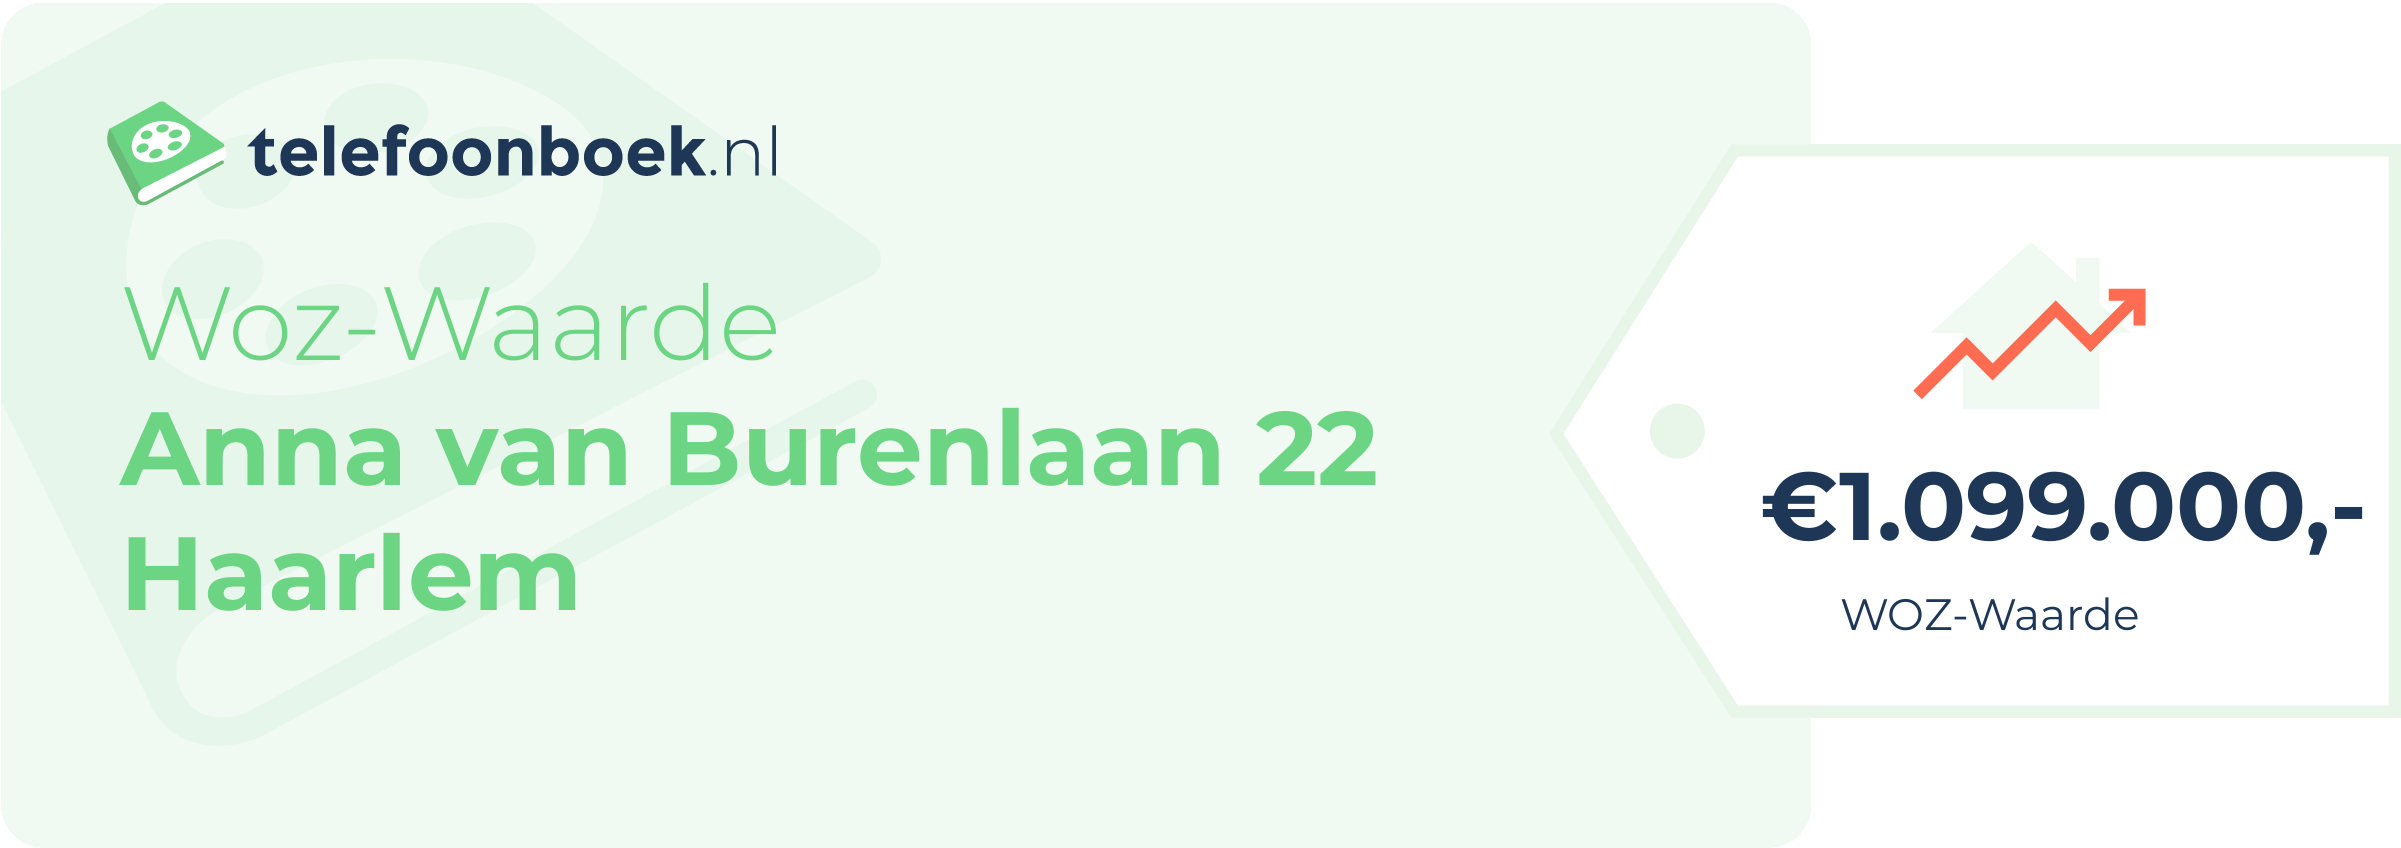 WOZ-waarde Anna Van Burenlaan 22 Haarlem